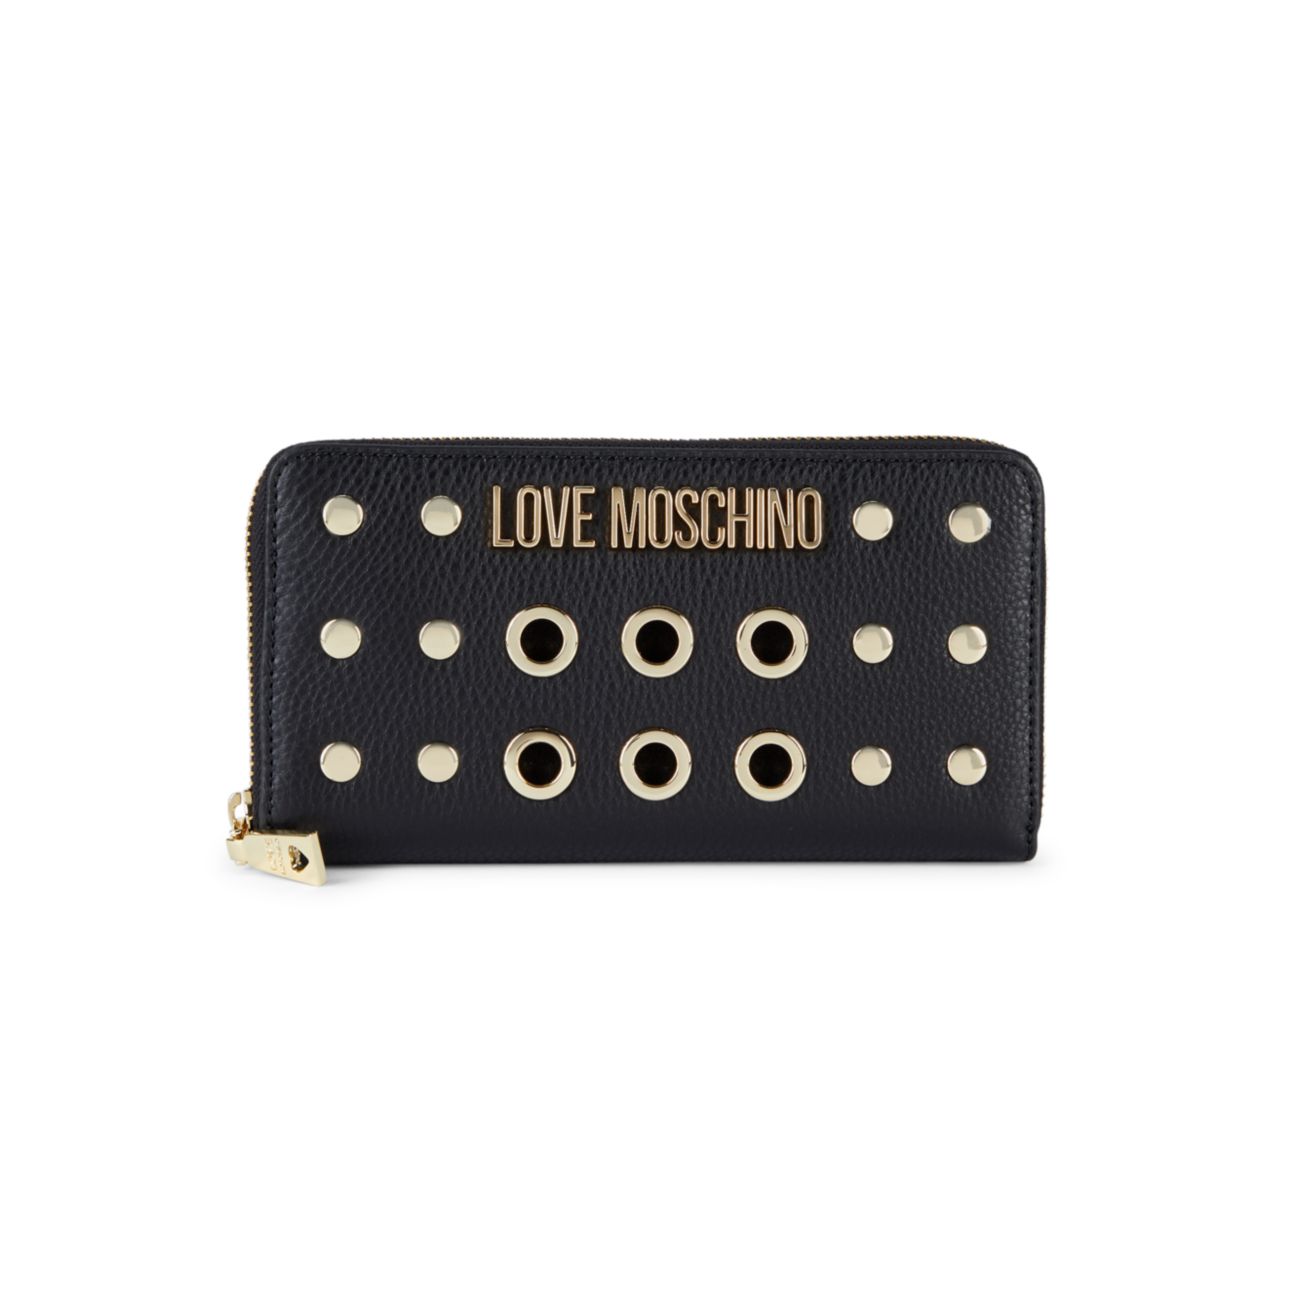 Втулка & amp; Кожаный кошелек с заклепками LOVE Moschino